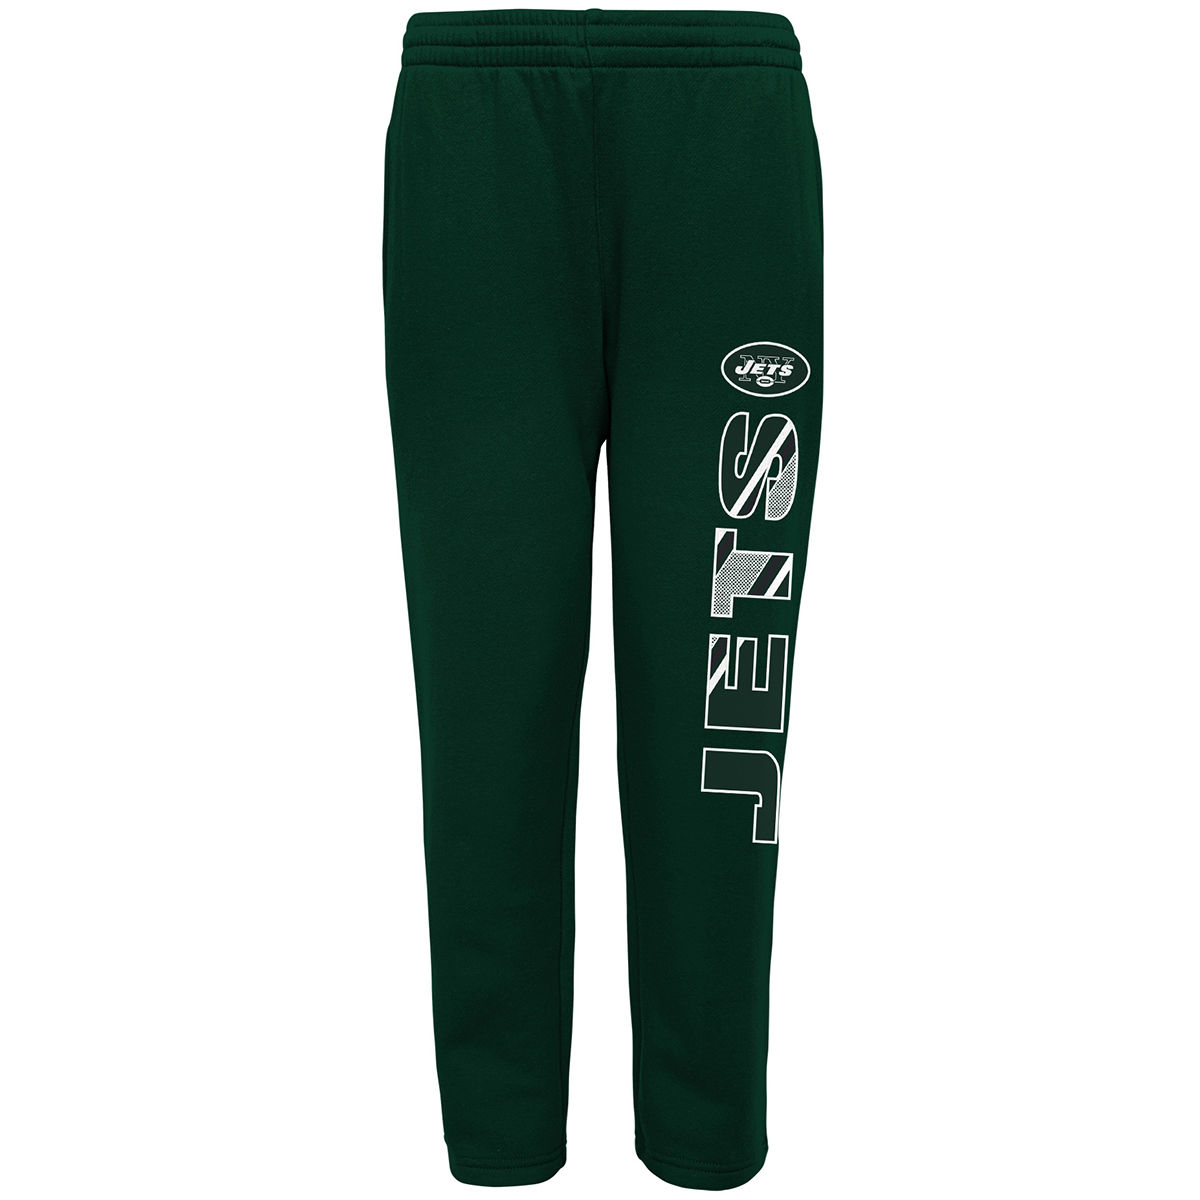 New York Jets Big Boys' Origin Fleece Pants - Green, XL